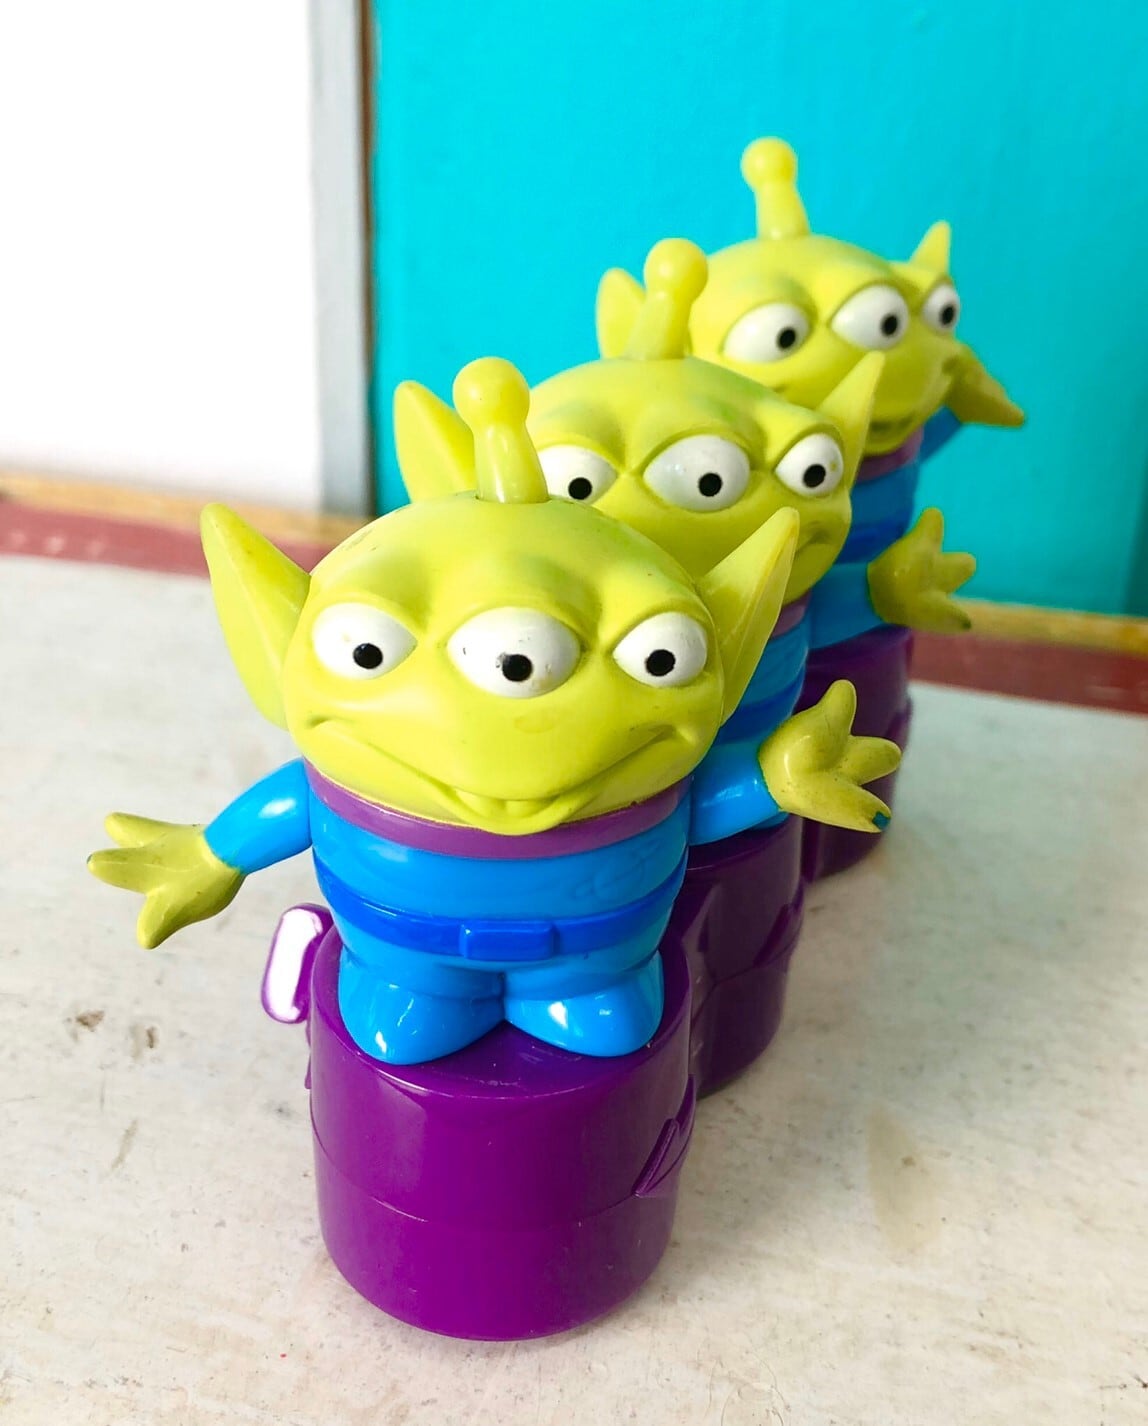 Disney Pixar Toy Story Aliens(LGM) Gimmick toy【ﾄｲｽﾄｰﾘｰ ﾘﾄﾙｸﾞﾘｰﾝﾒﾝ